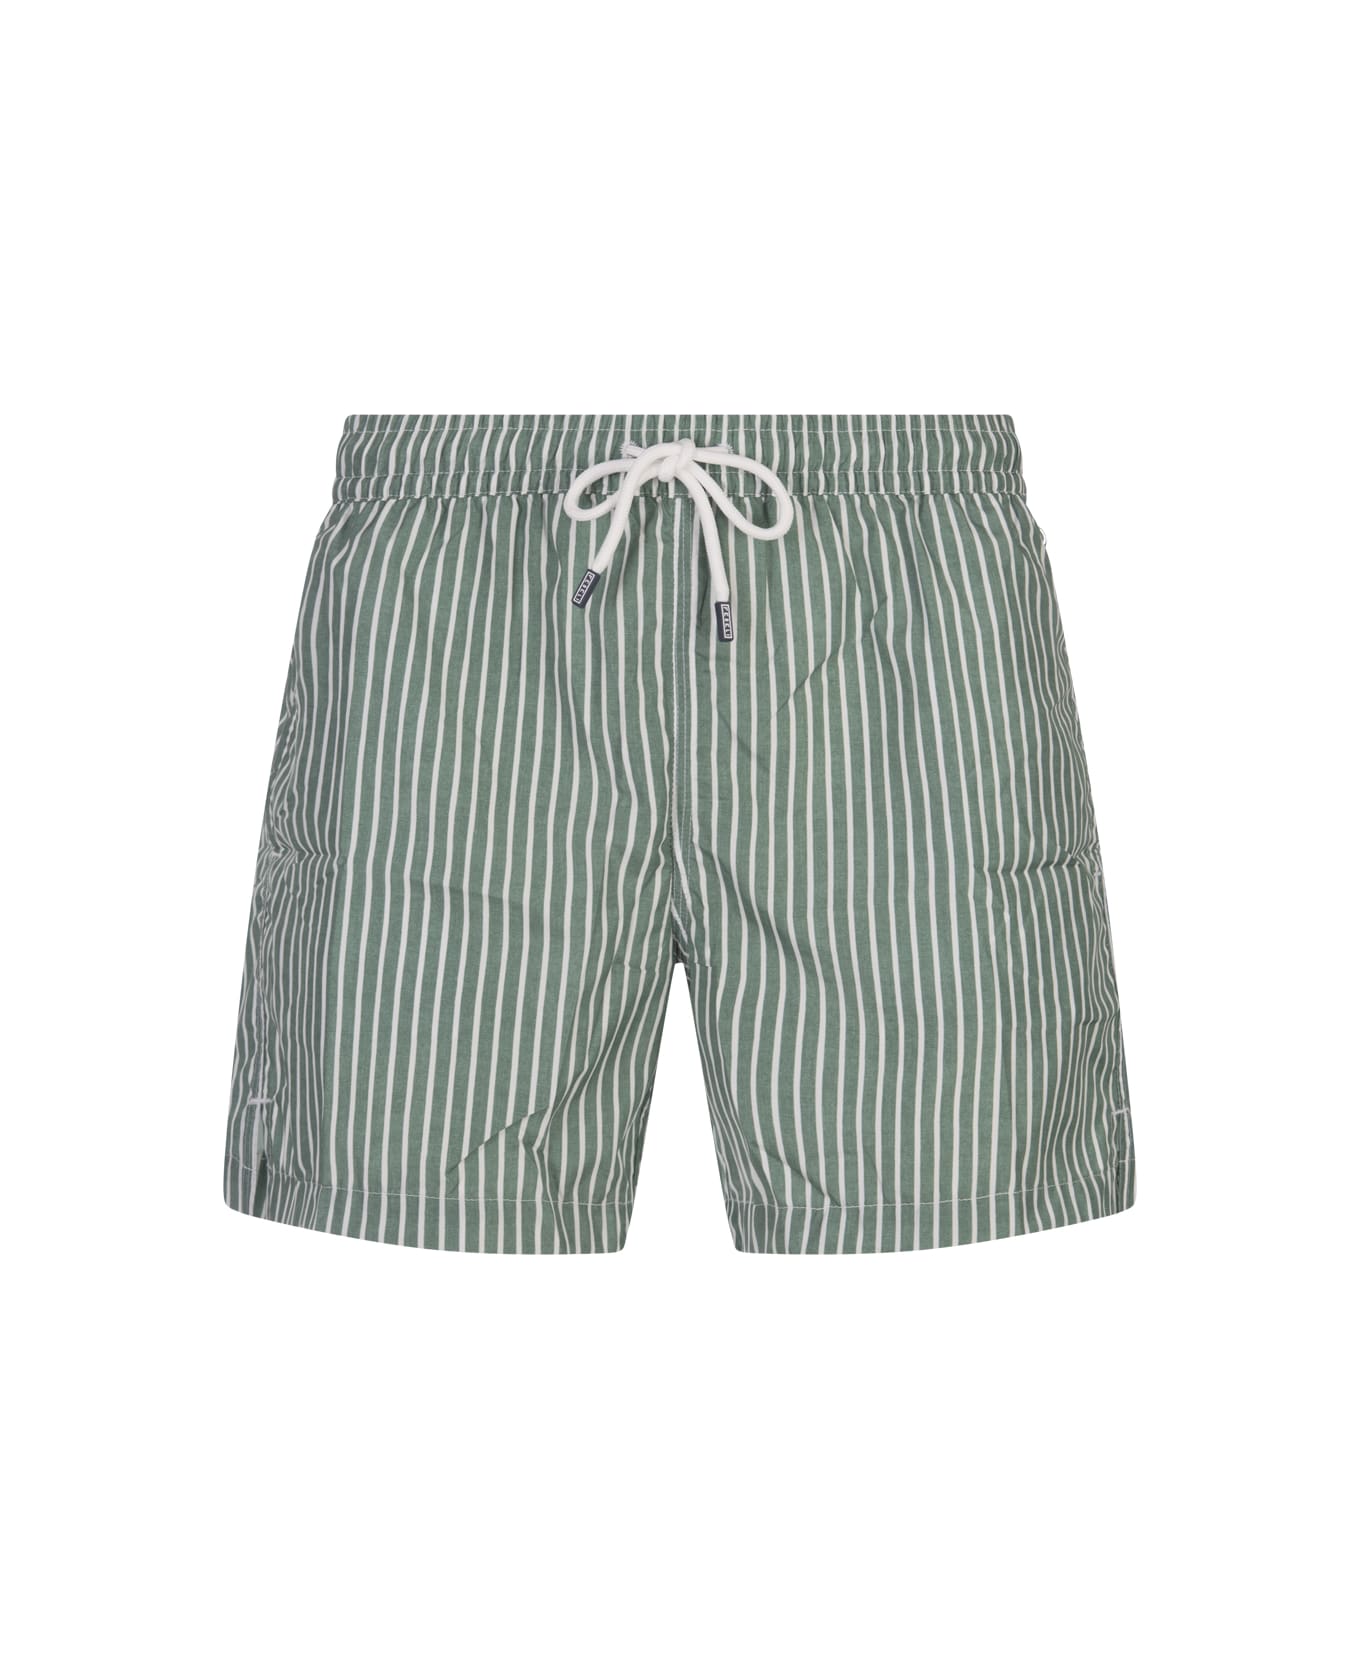 Fedeli Green And White Striped Swim Shorts - Green